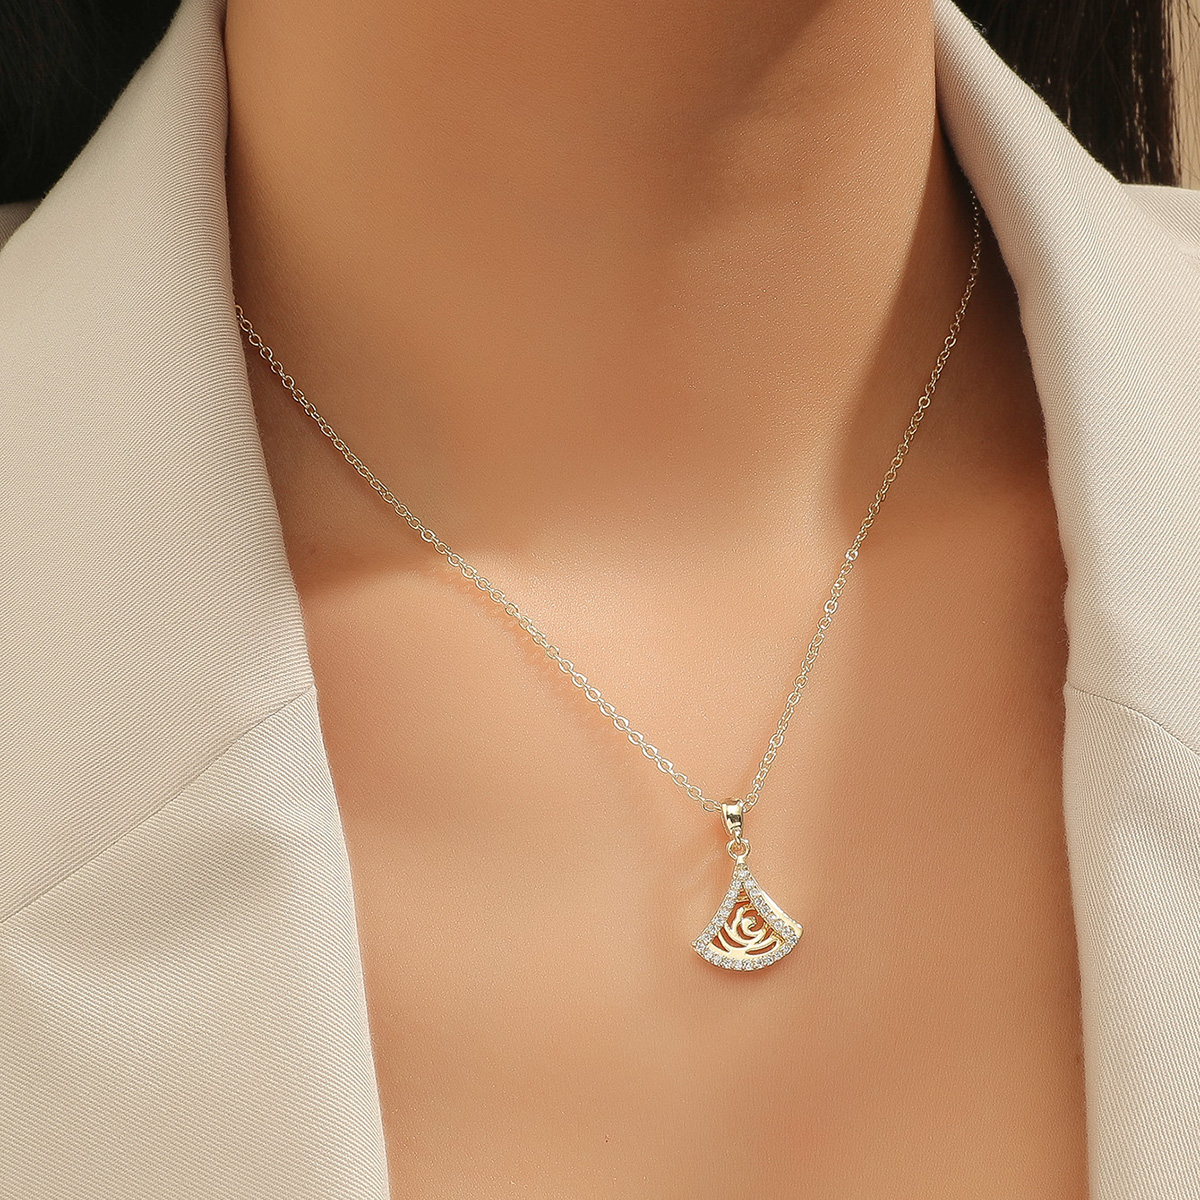 10pcs Double Fan-Shaped Crystal Pendant Necklace|GCJ295|UK SELLER